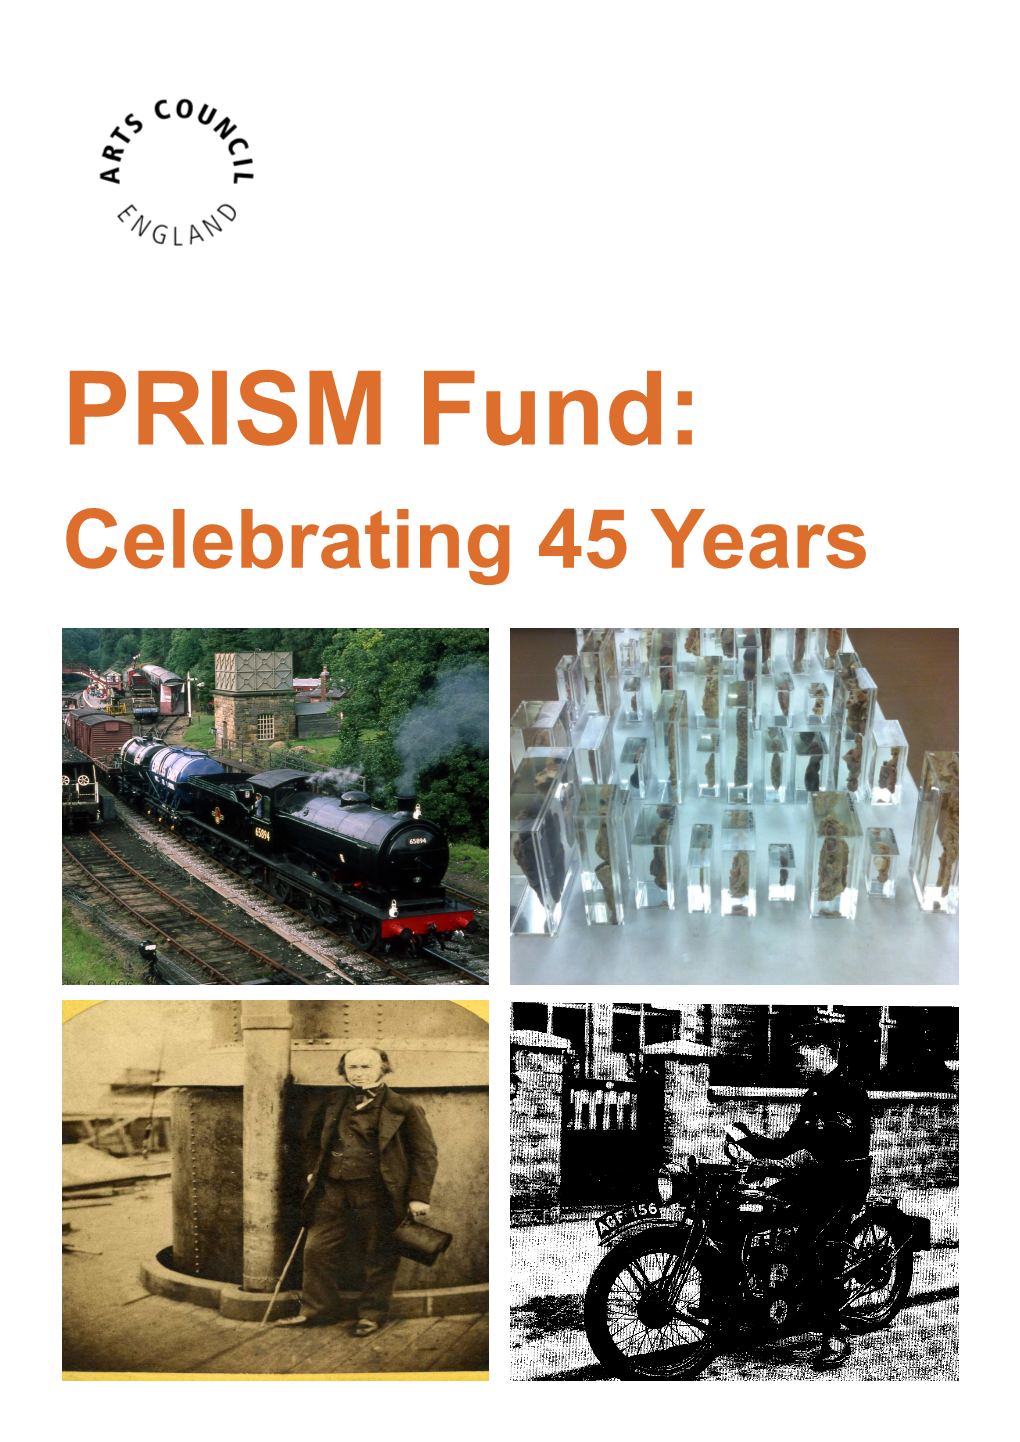 PRISM Fund: Celebrating 45 Years